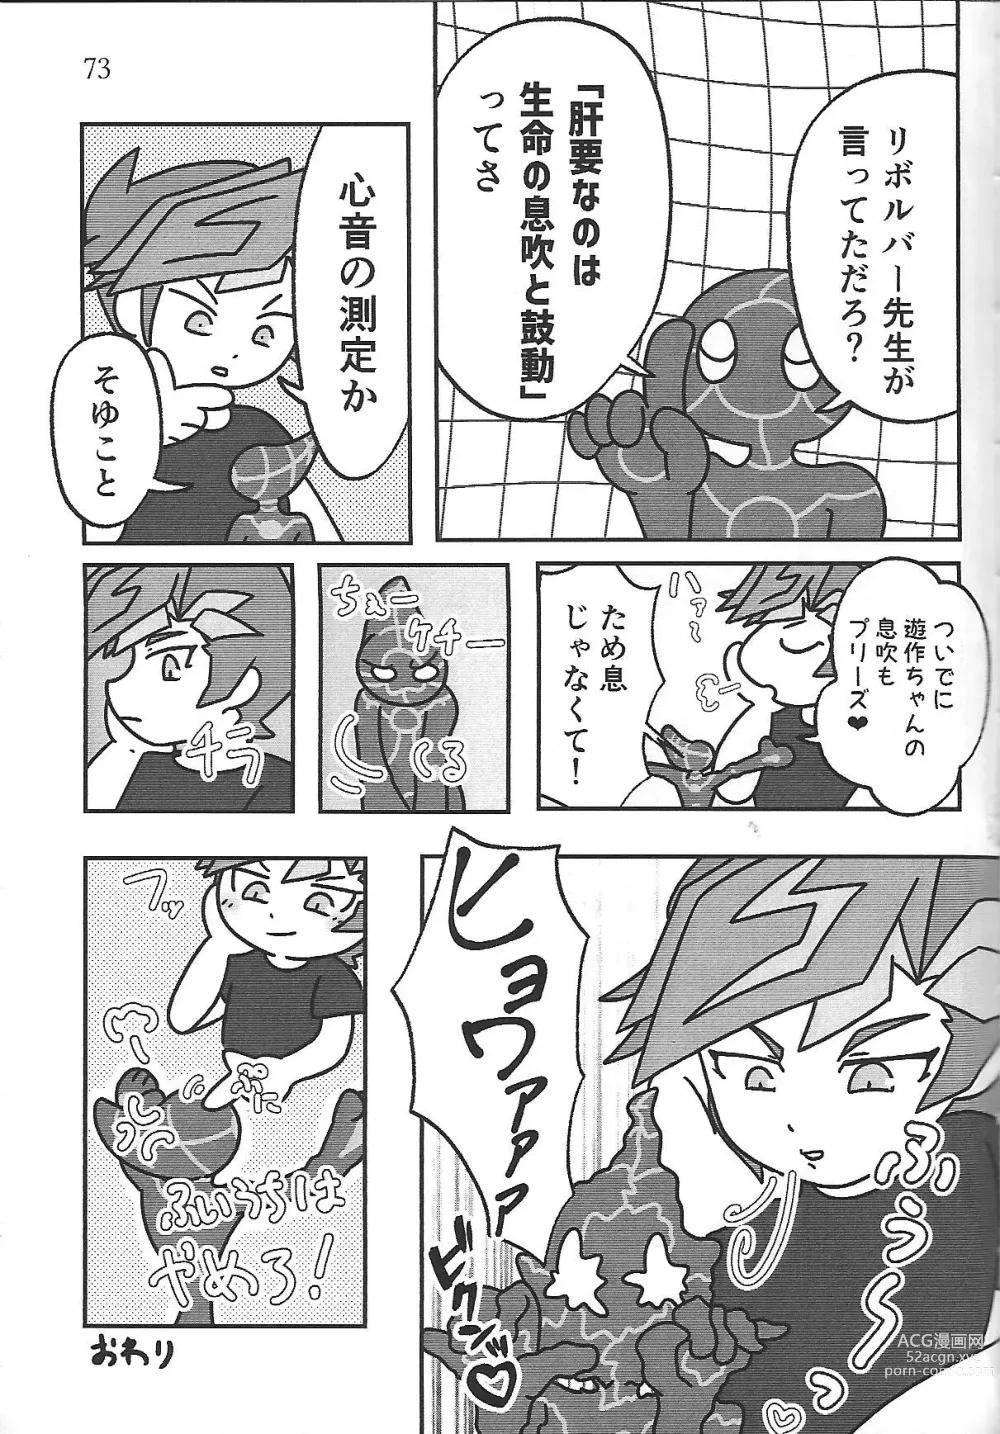 Page 28 of doujinshi Sou hito kikai